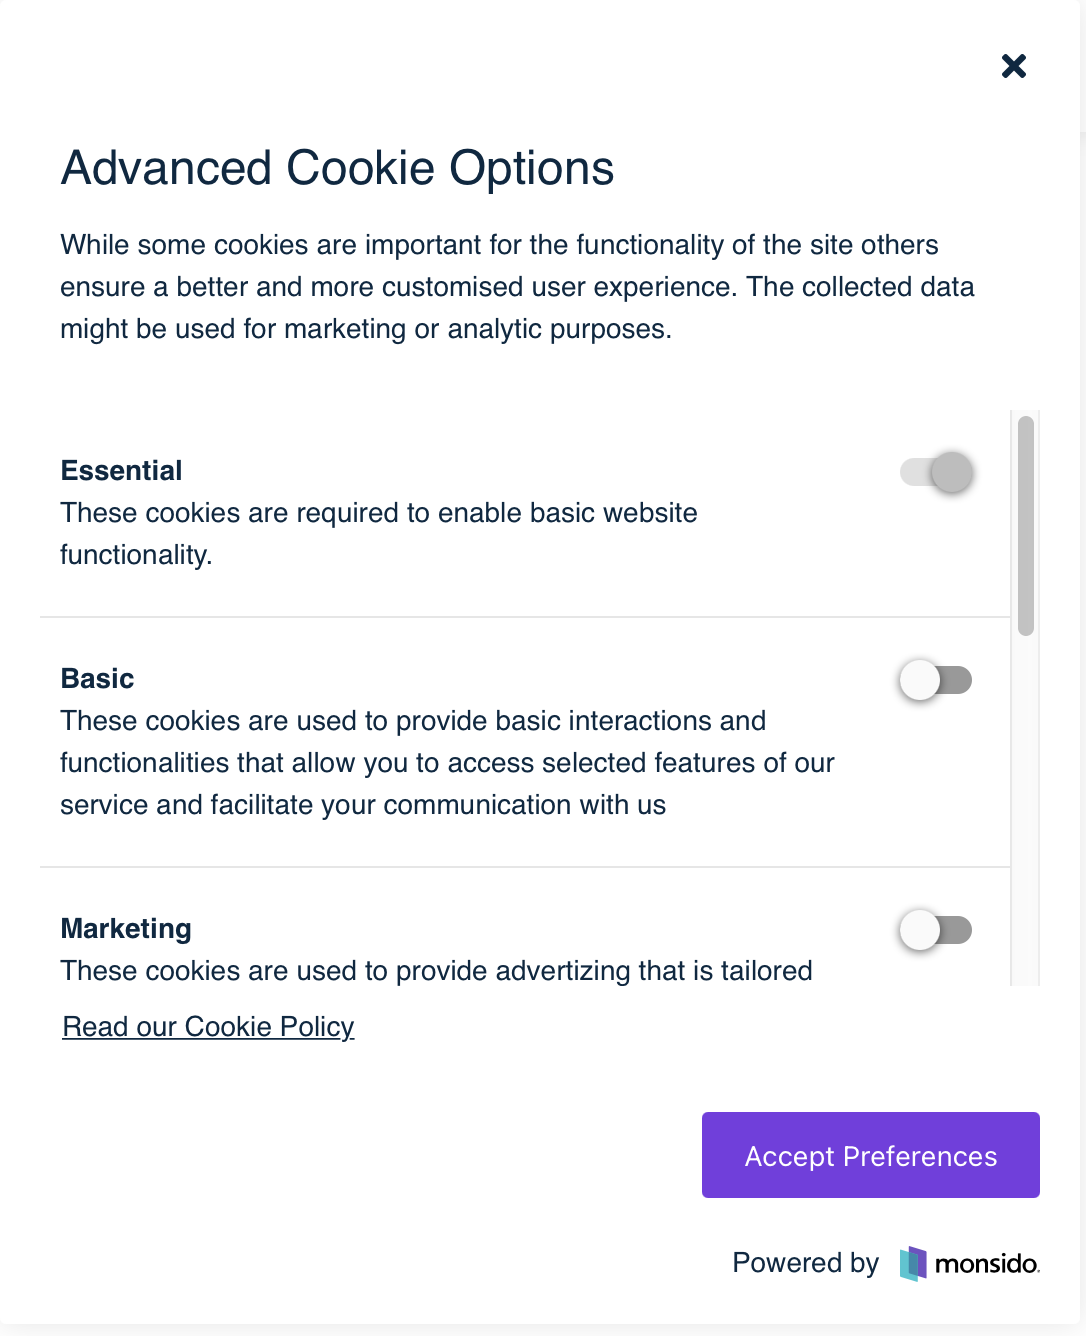 A screenshot of Monsido's Advanced Cookie options